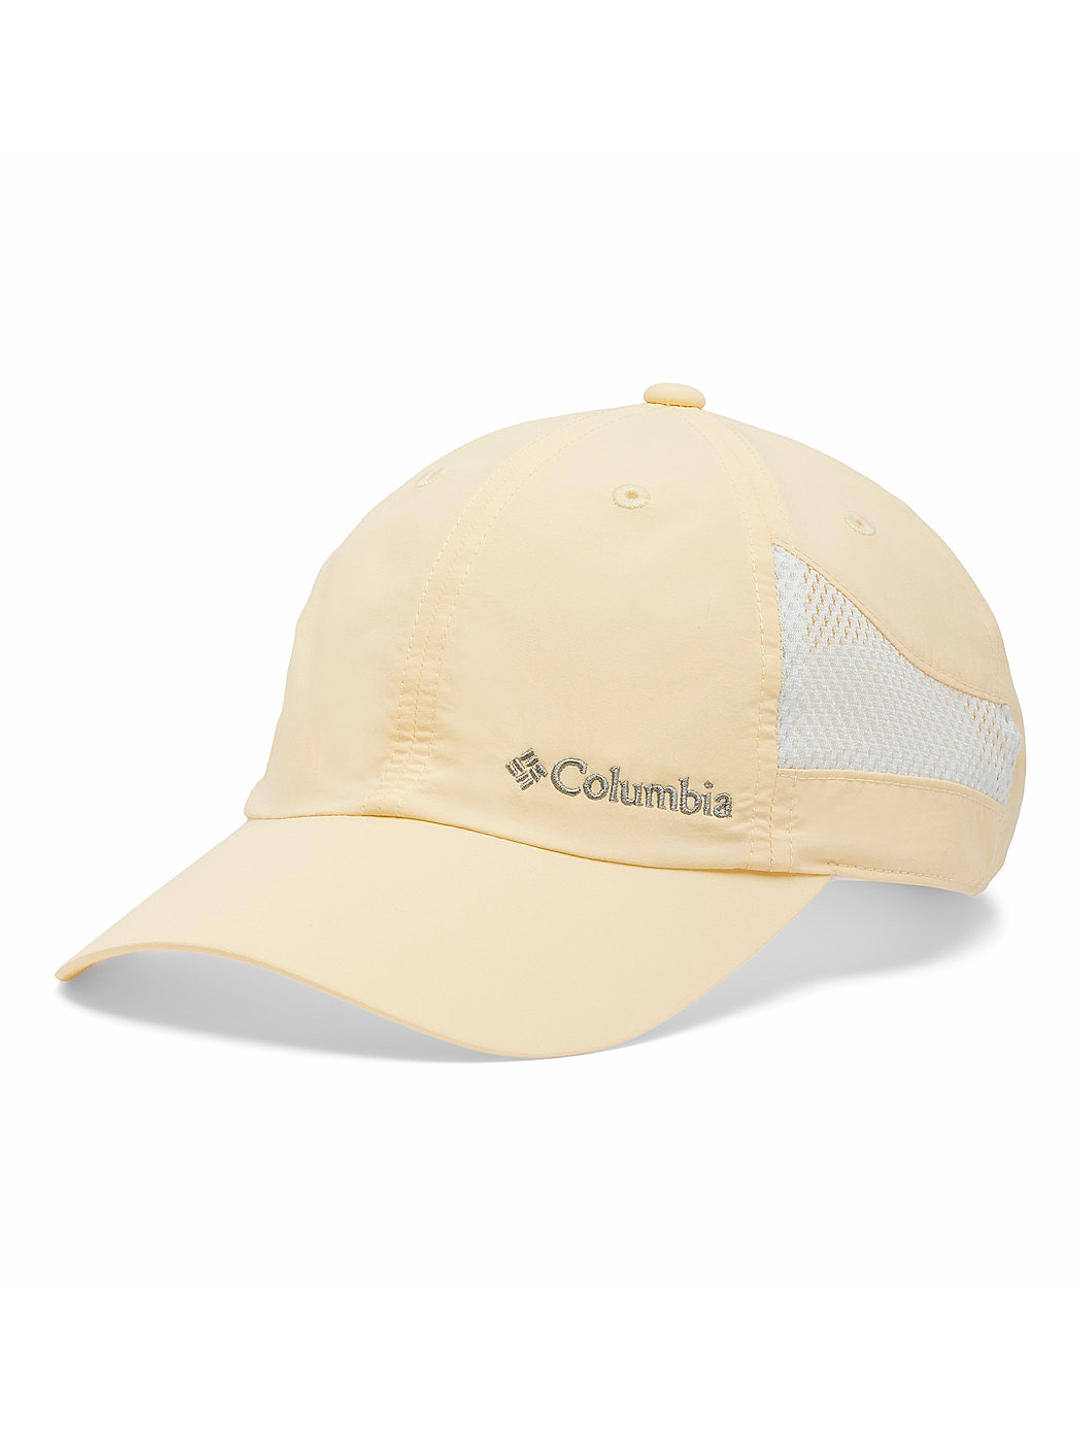 Columbia Unisex Yellow Tech Shade Cap (Sun Protection)